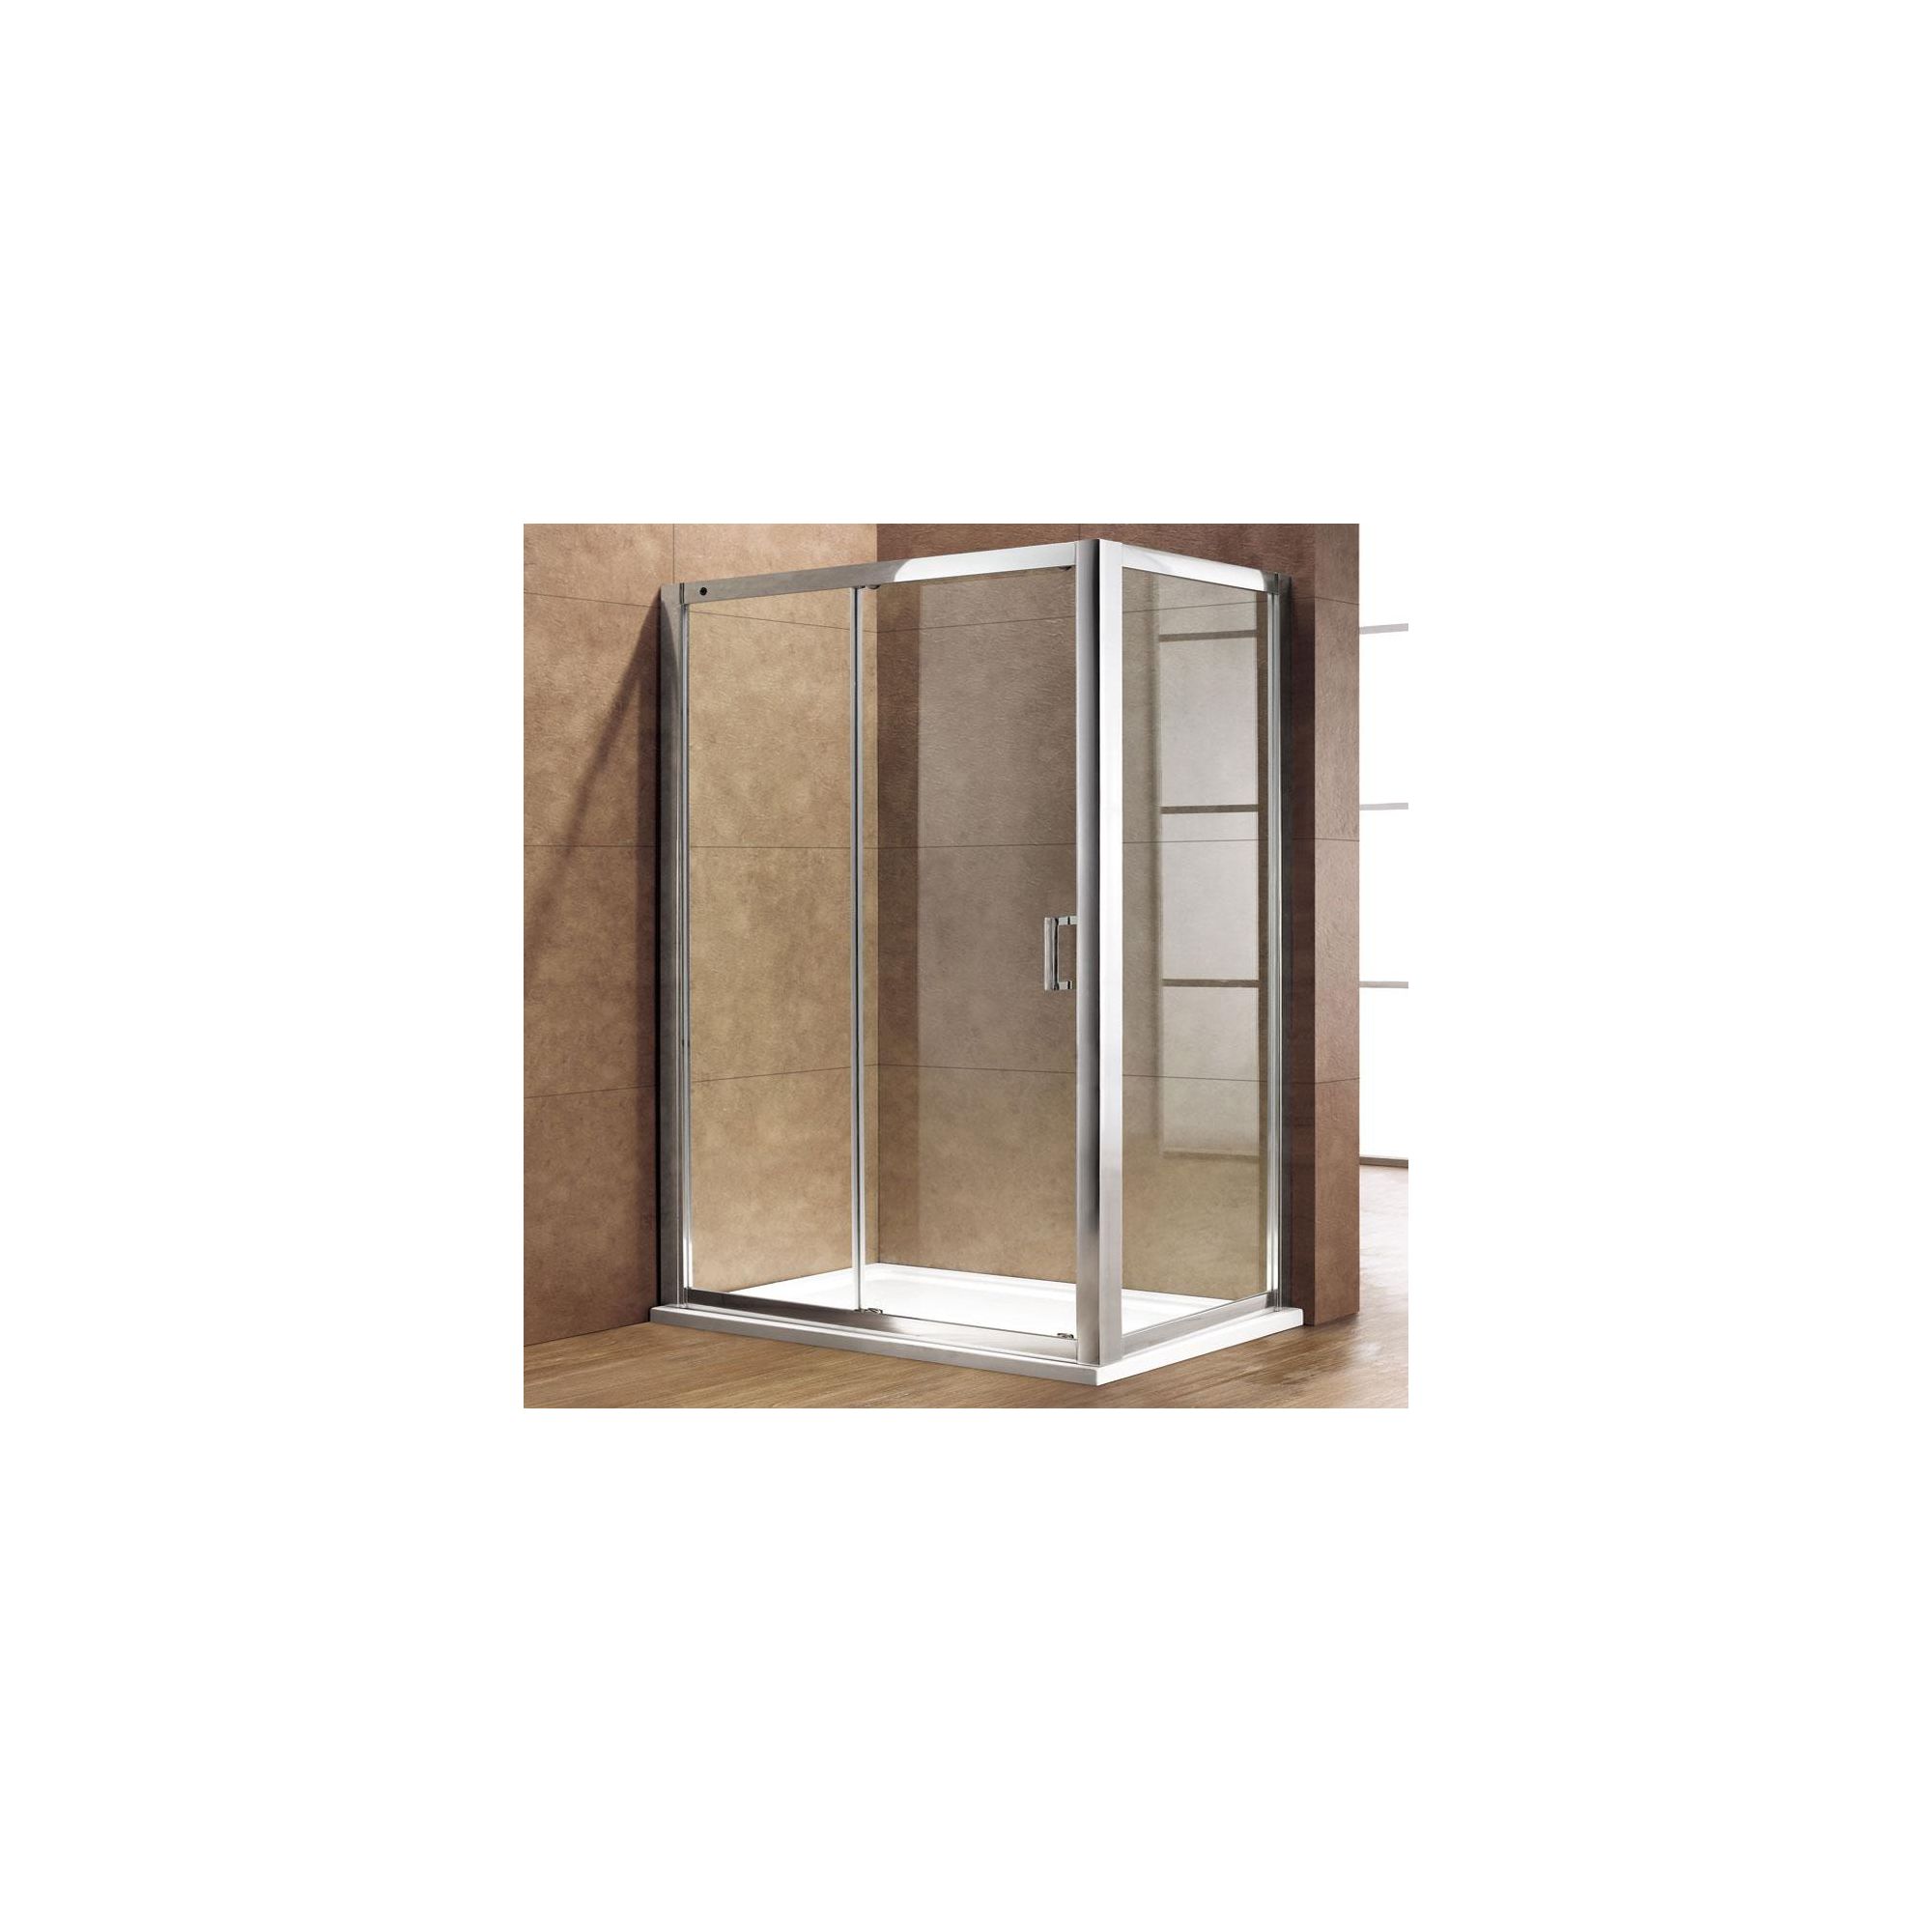 Duchy Premium Single Sliding Shower Door, 1100mm Wide, 8mm Glass at Tesco Direct